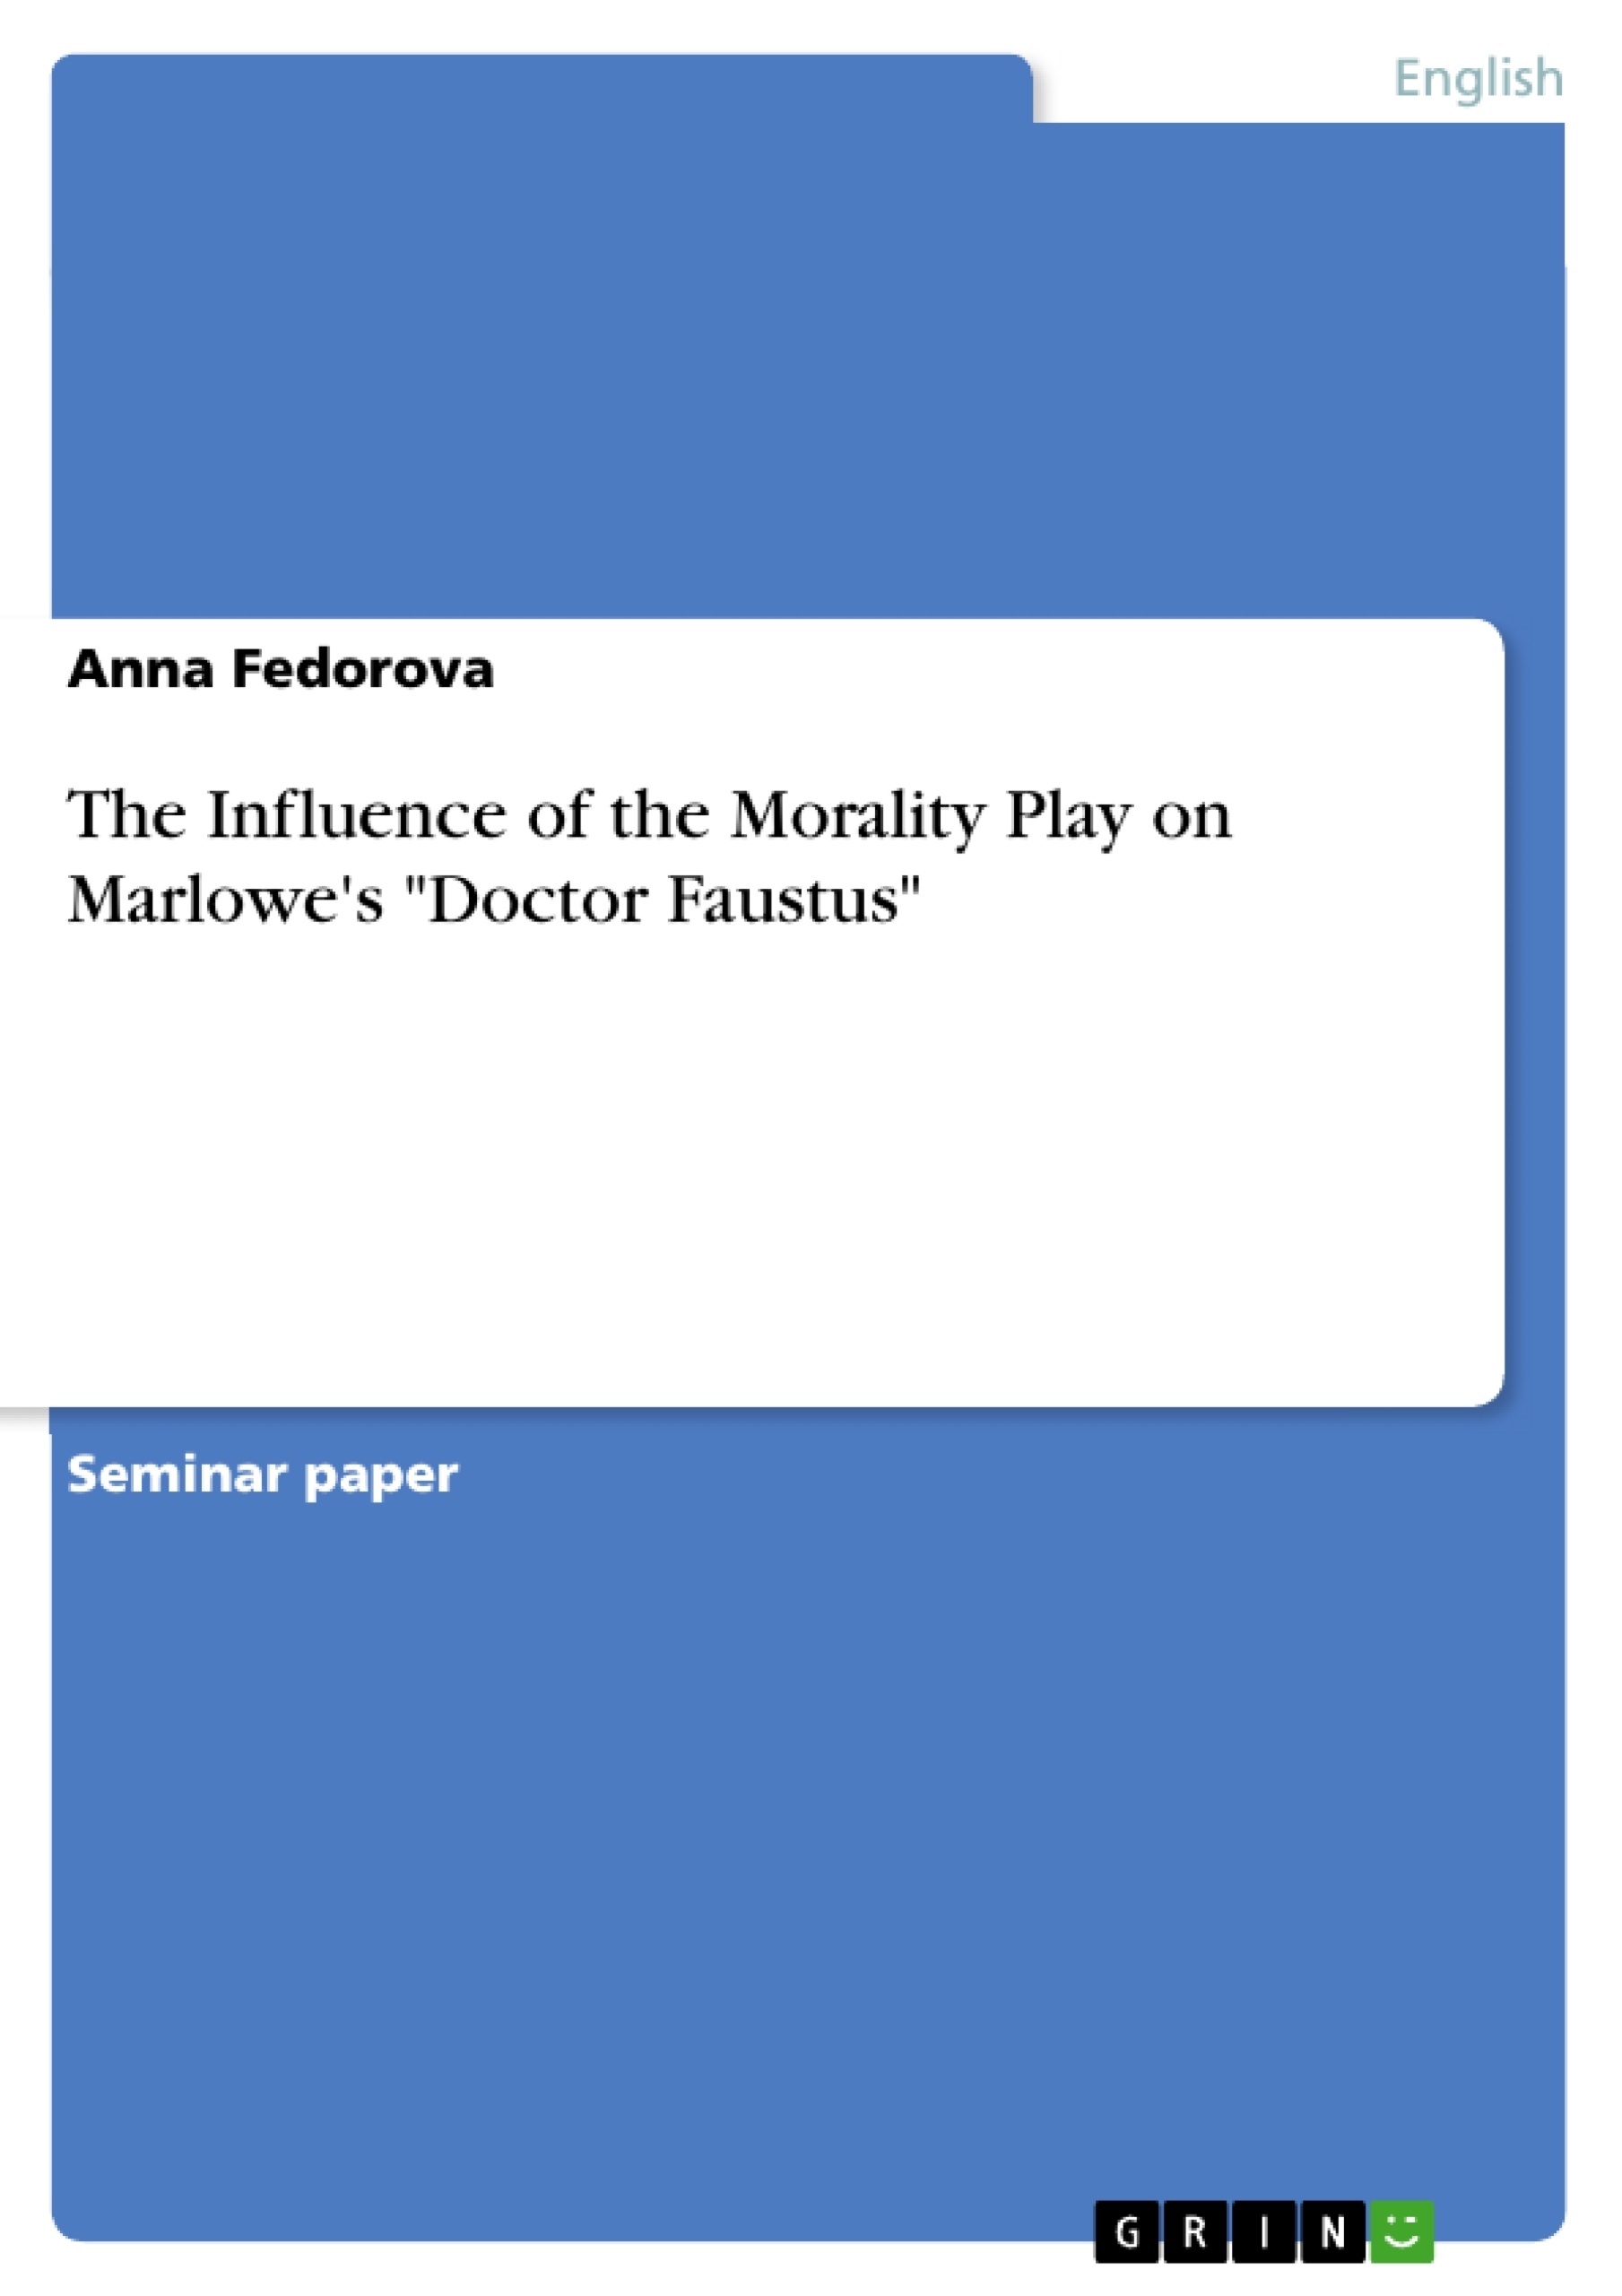 Literary analysis of doctor faustus